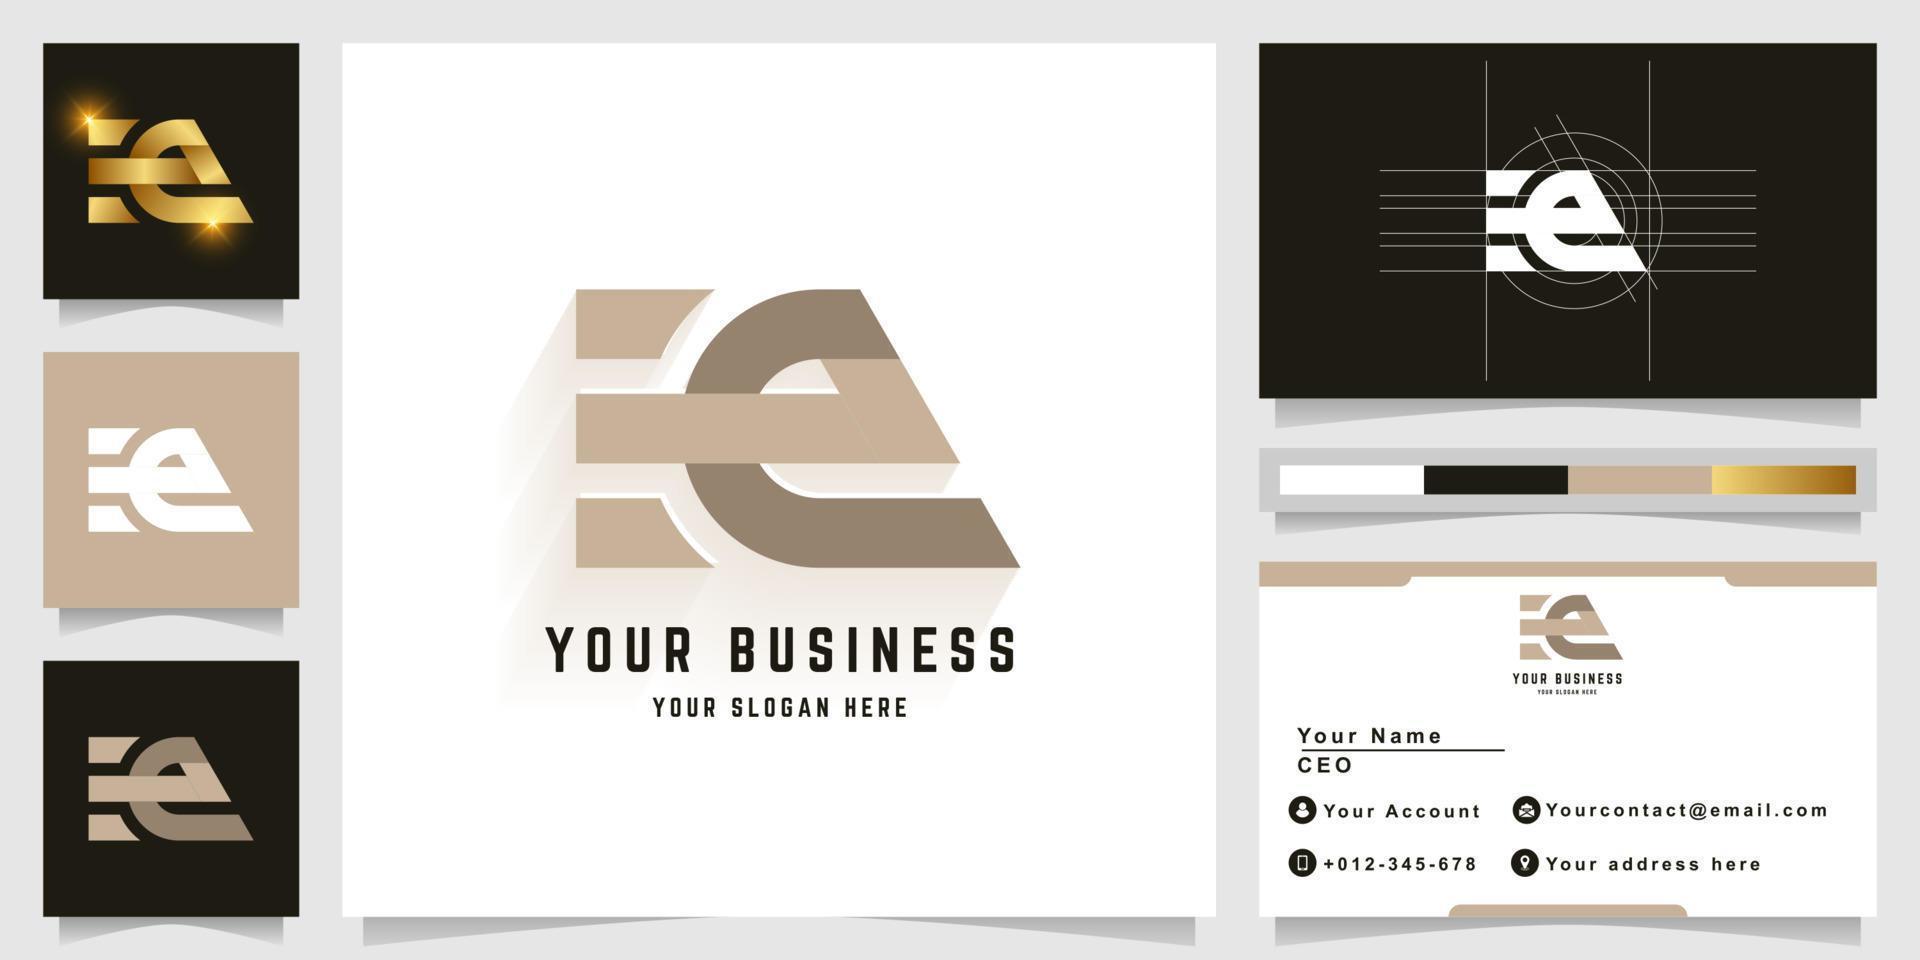 Letter Ee or EA monogram logo with business card design vector